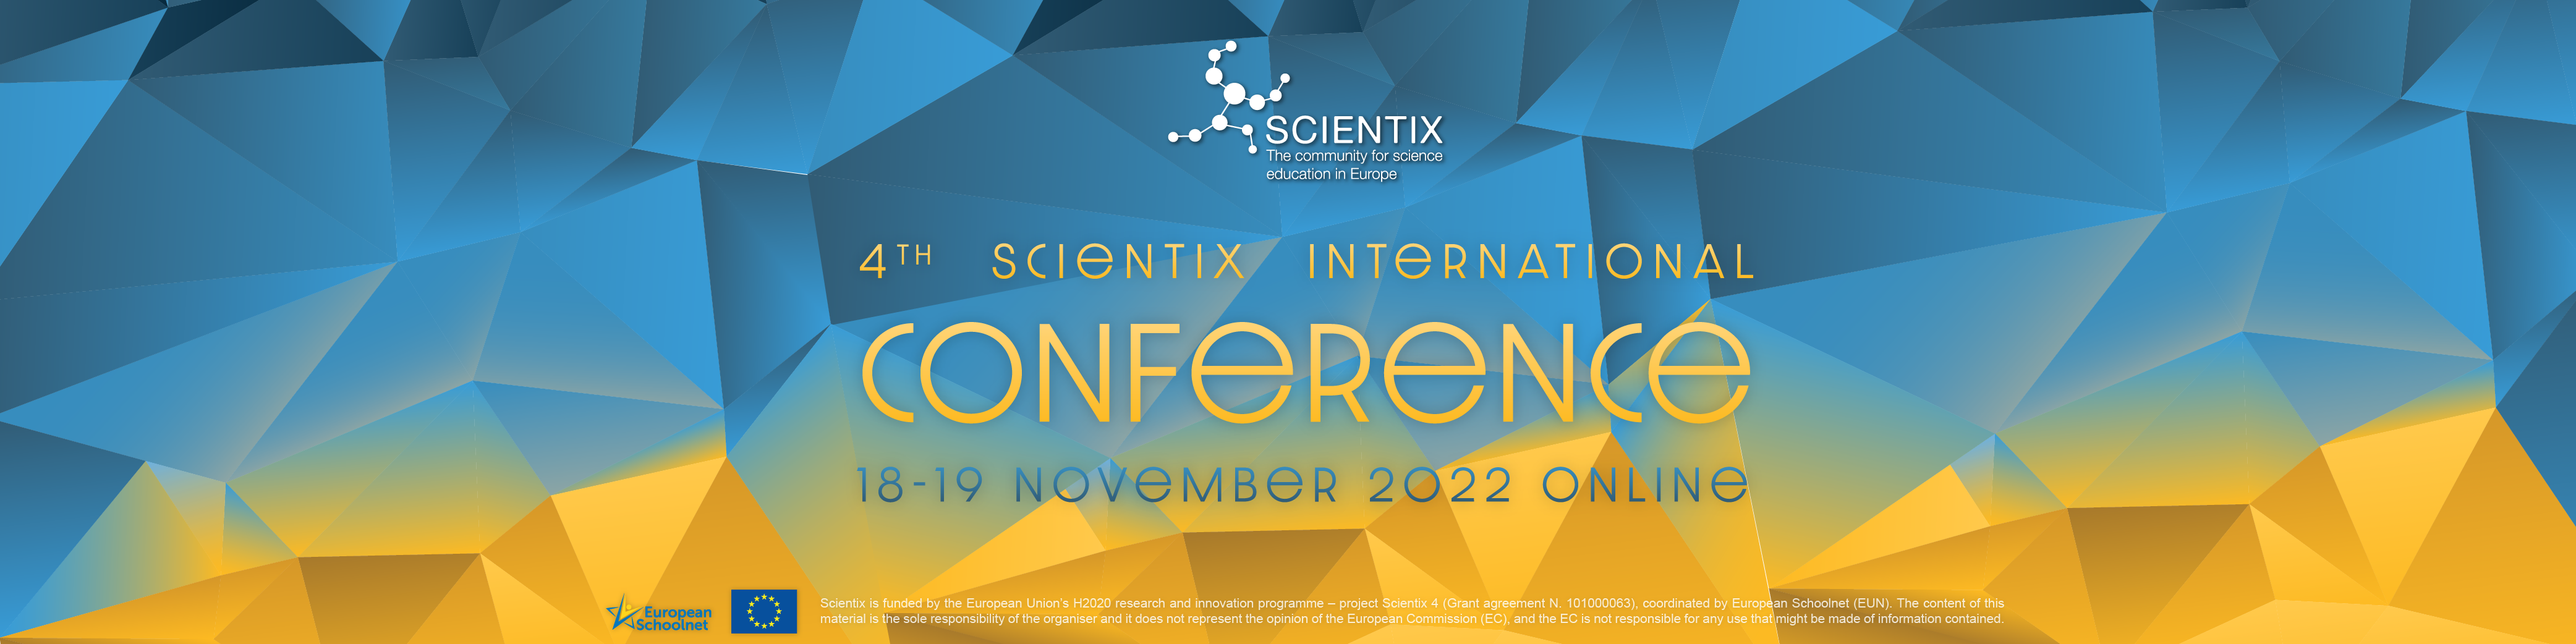 Scientix Conference